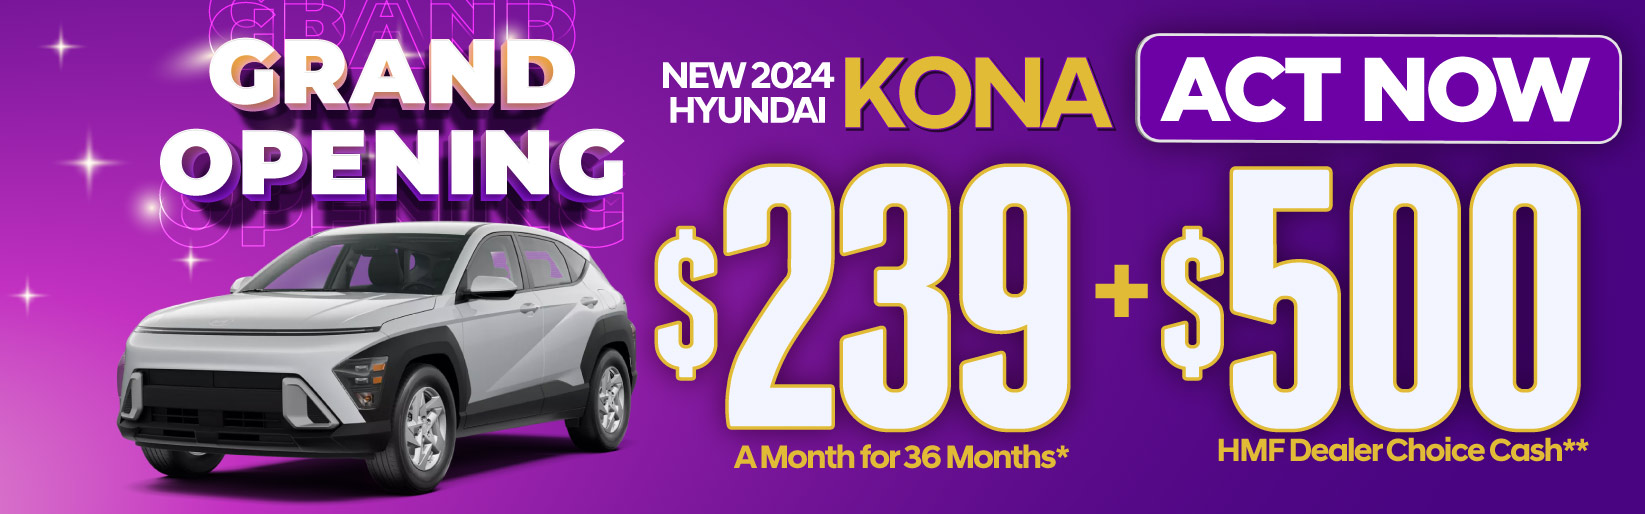 New 2024 Hyundai Kona - $239 A Month for 36 Months* + $500 HMF Dealer Choice Cash** – Act Now